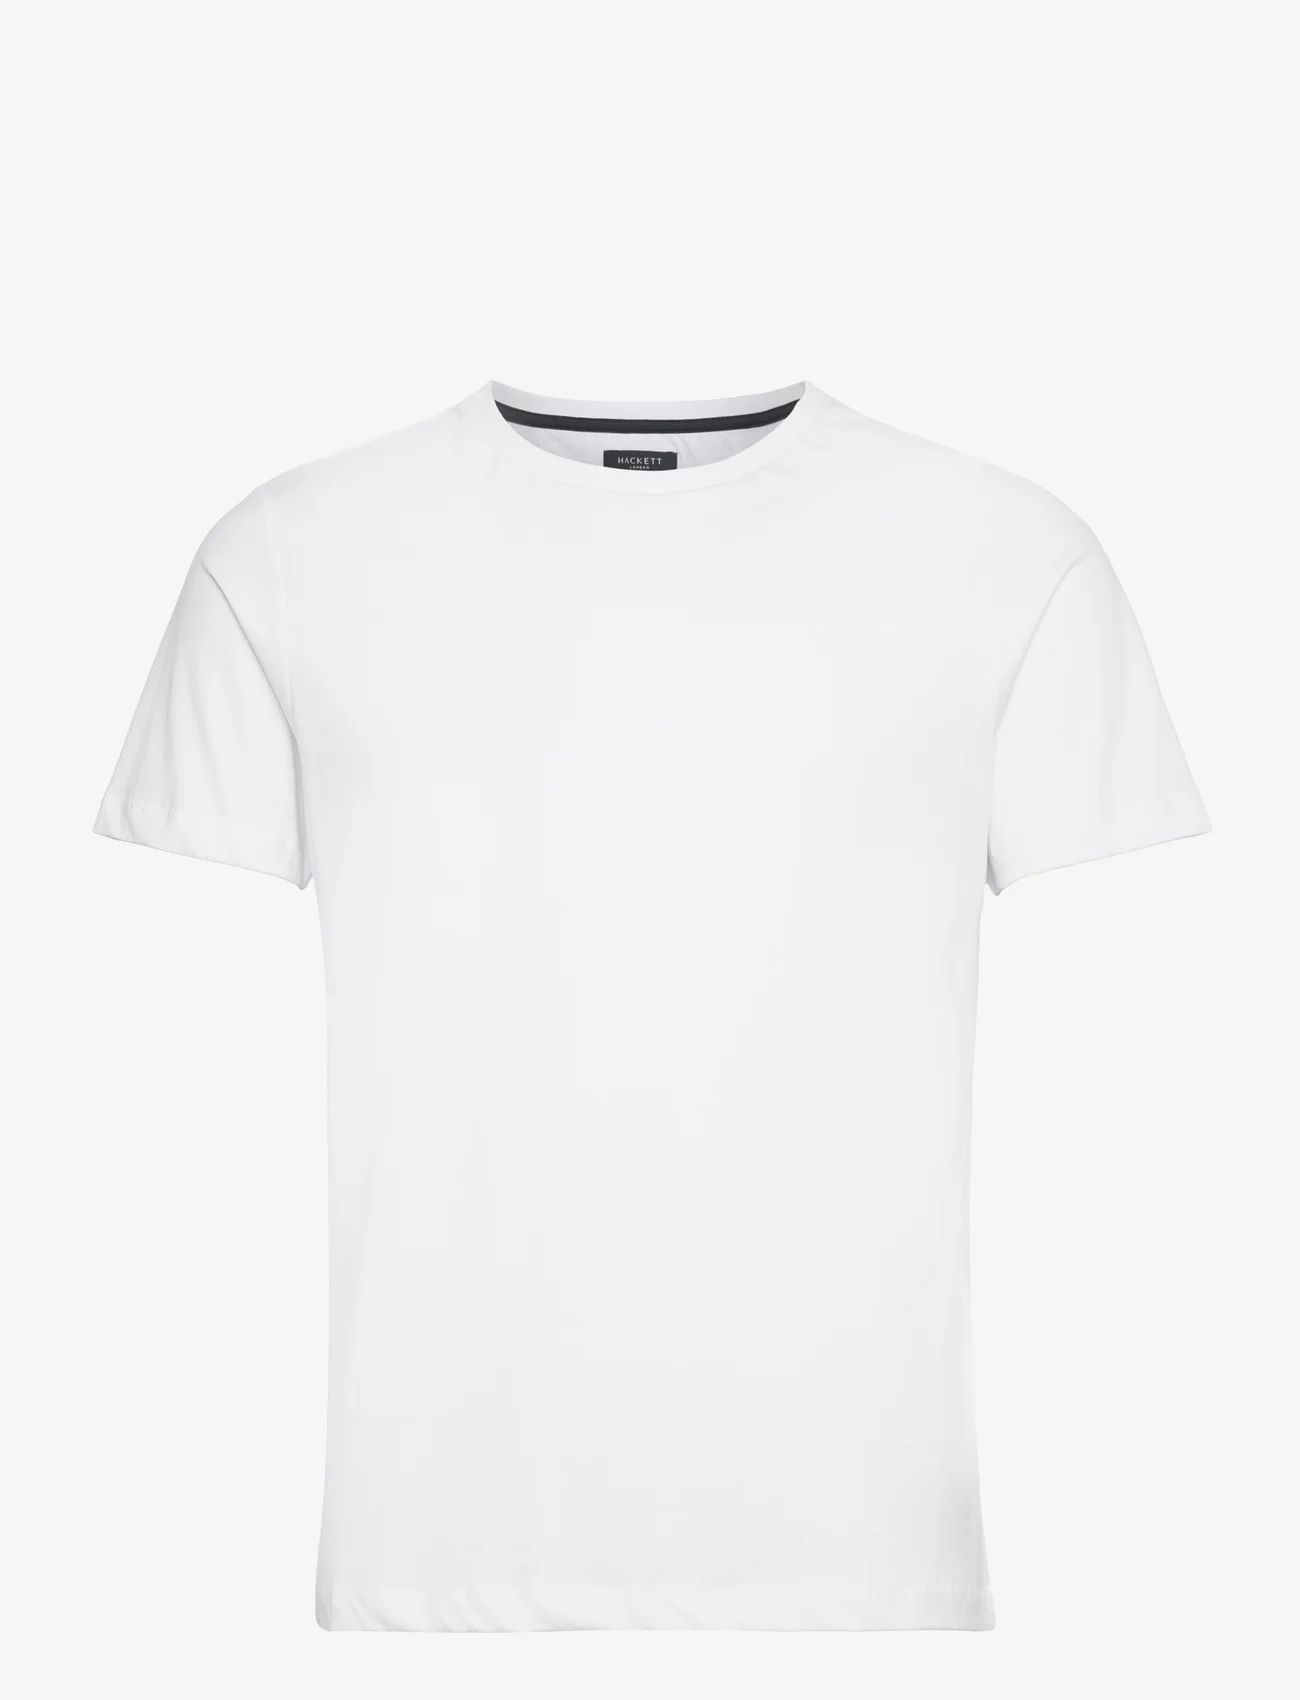 Hackett London - PIMA COTTON TEE - basic t-shirts - white - 0